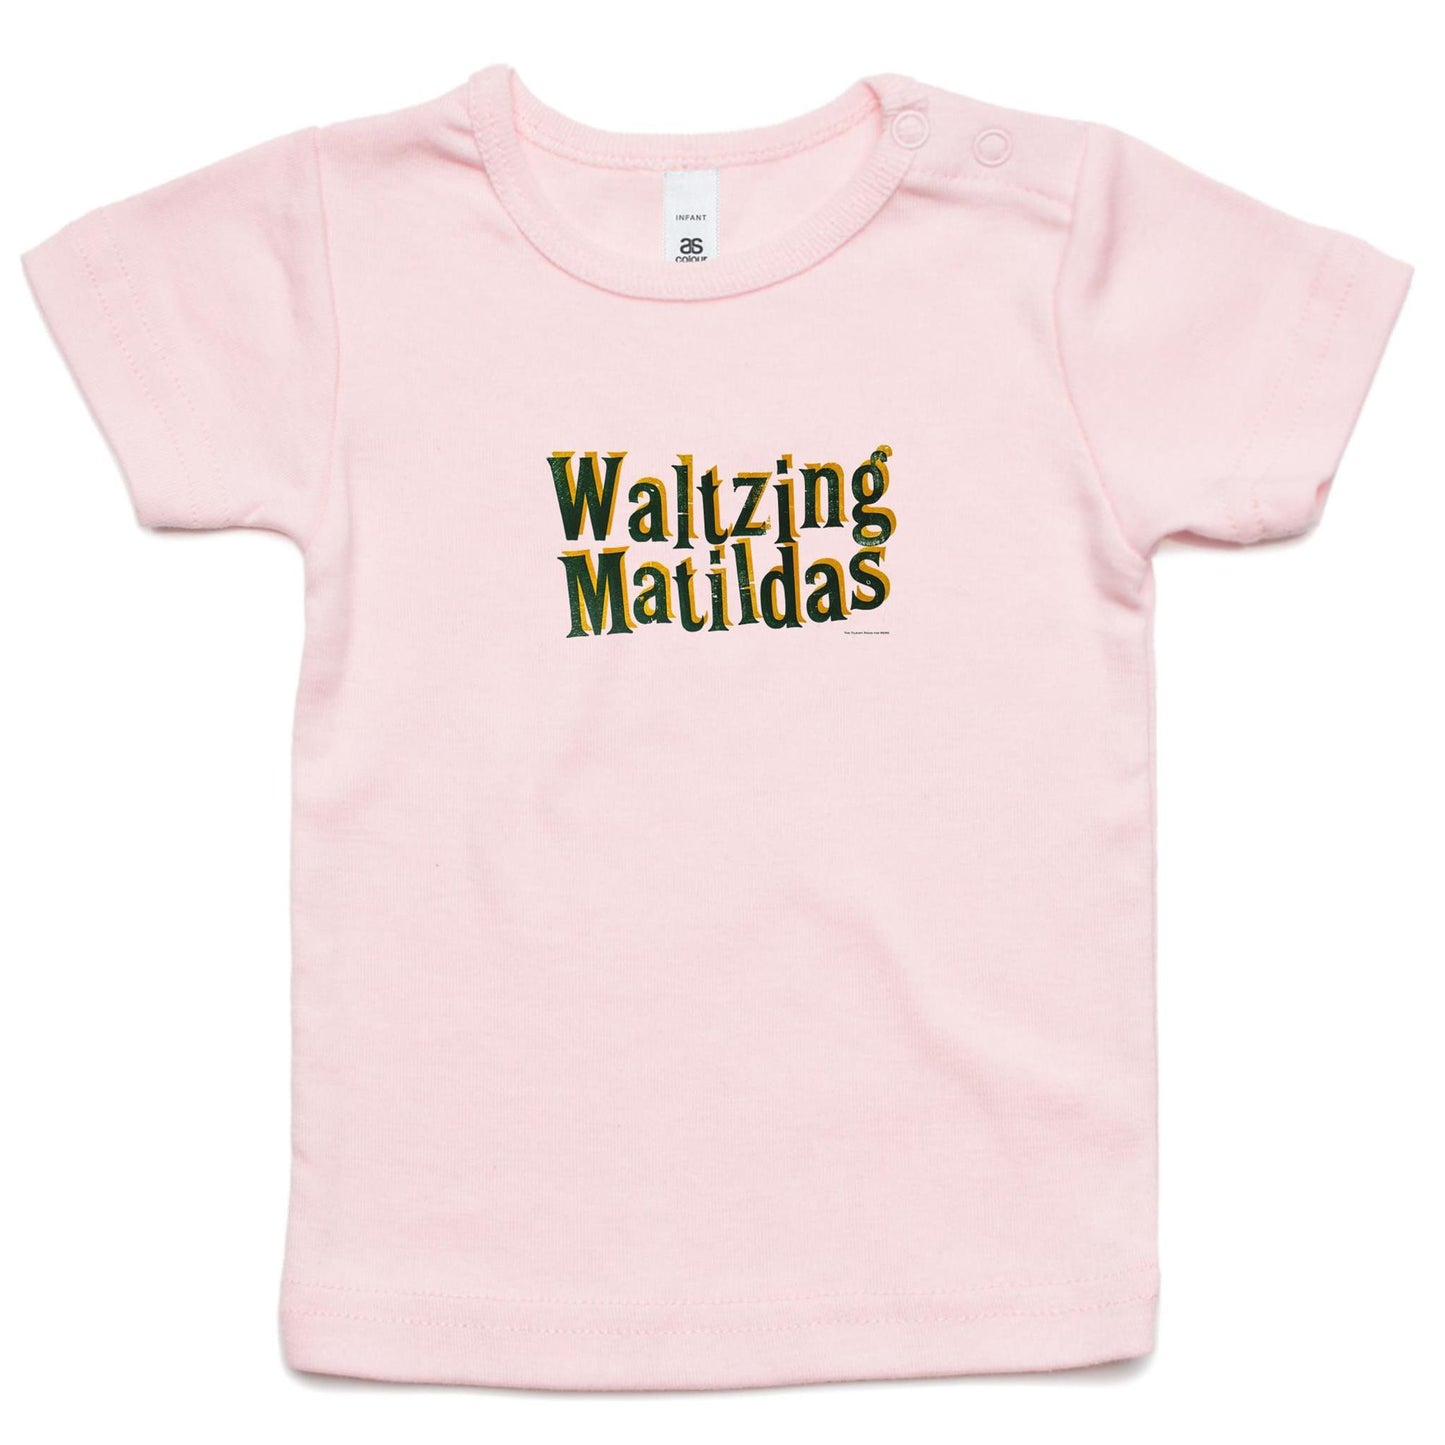 Waltzing Matildas T Shirts for Babies